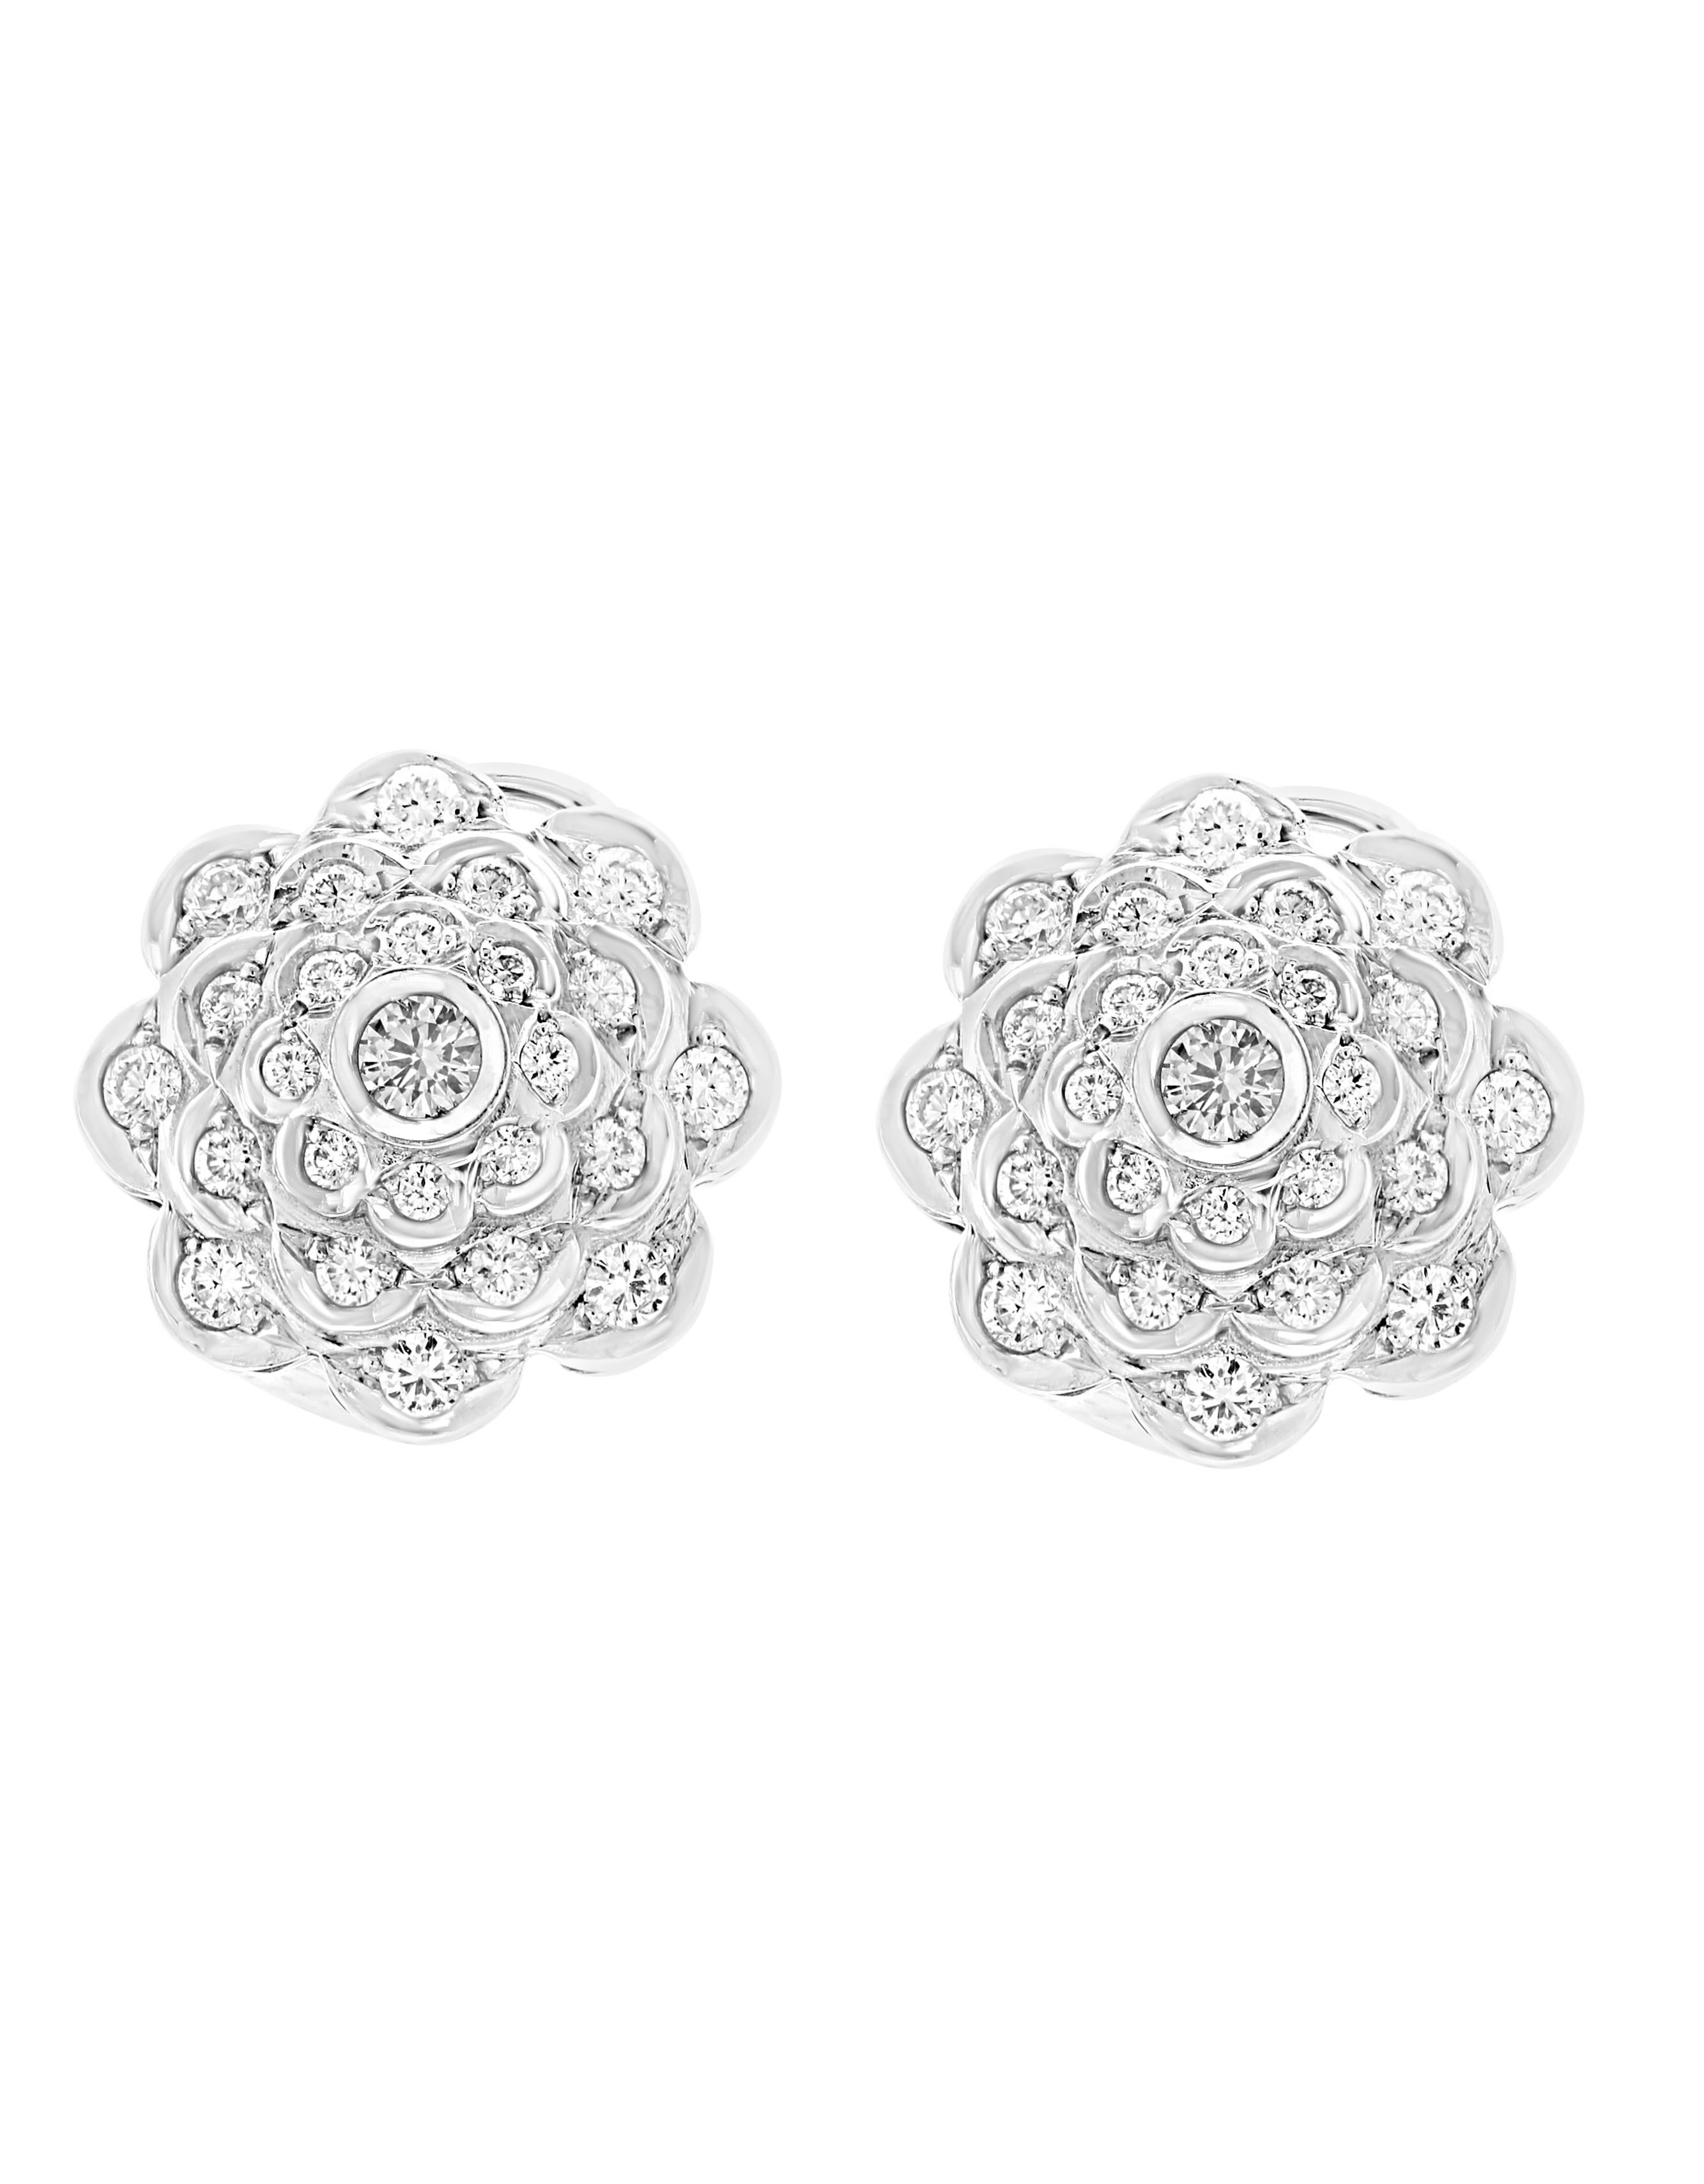 Round Cut 2.8 Carat Diamond VS Quality Flower/Cluster Earring 18 Karat White Gold For Sale